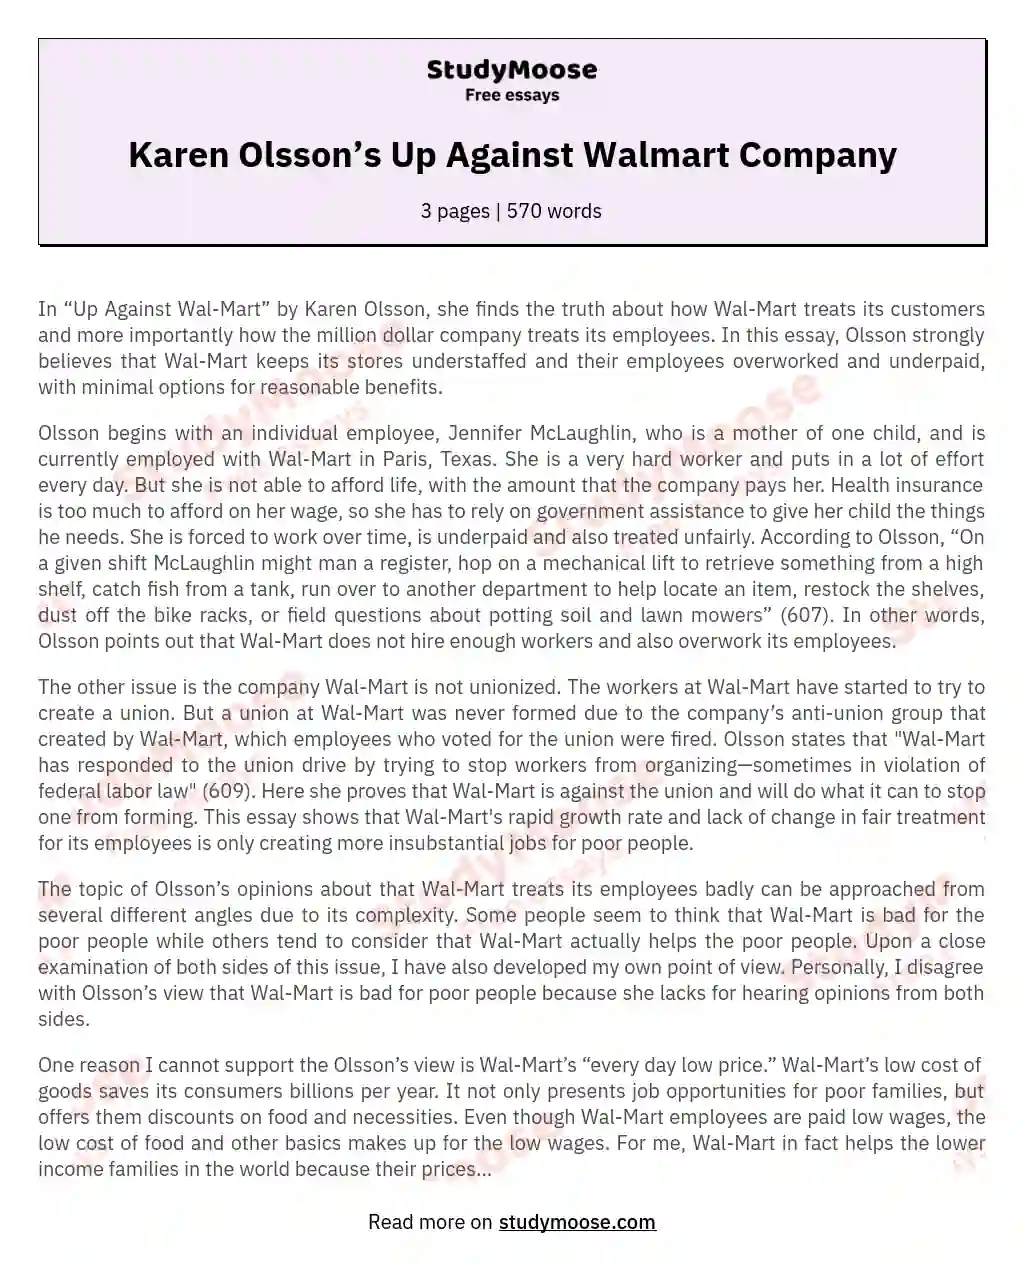 Karen Olsson’s Up Against Walmart Company essay